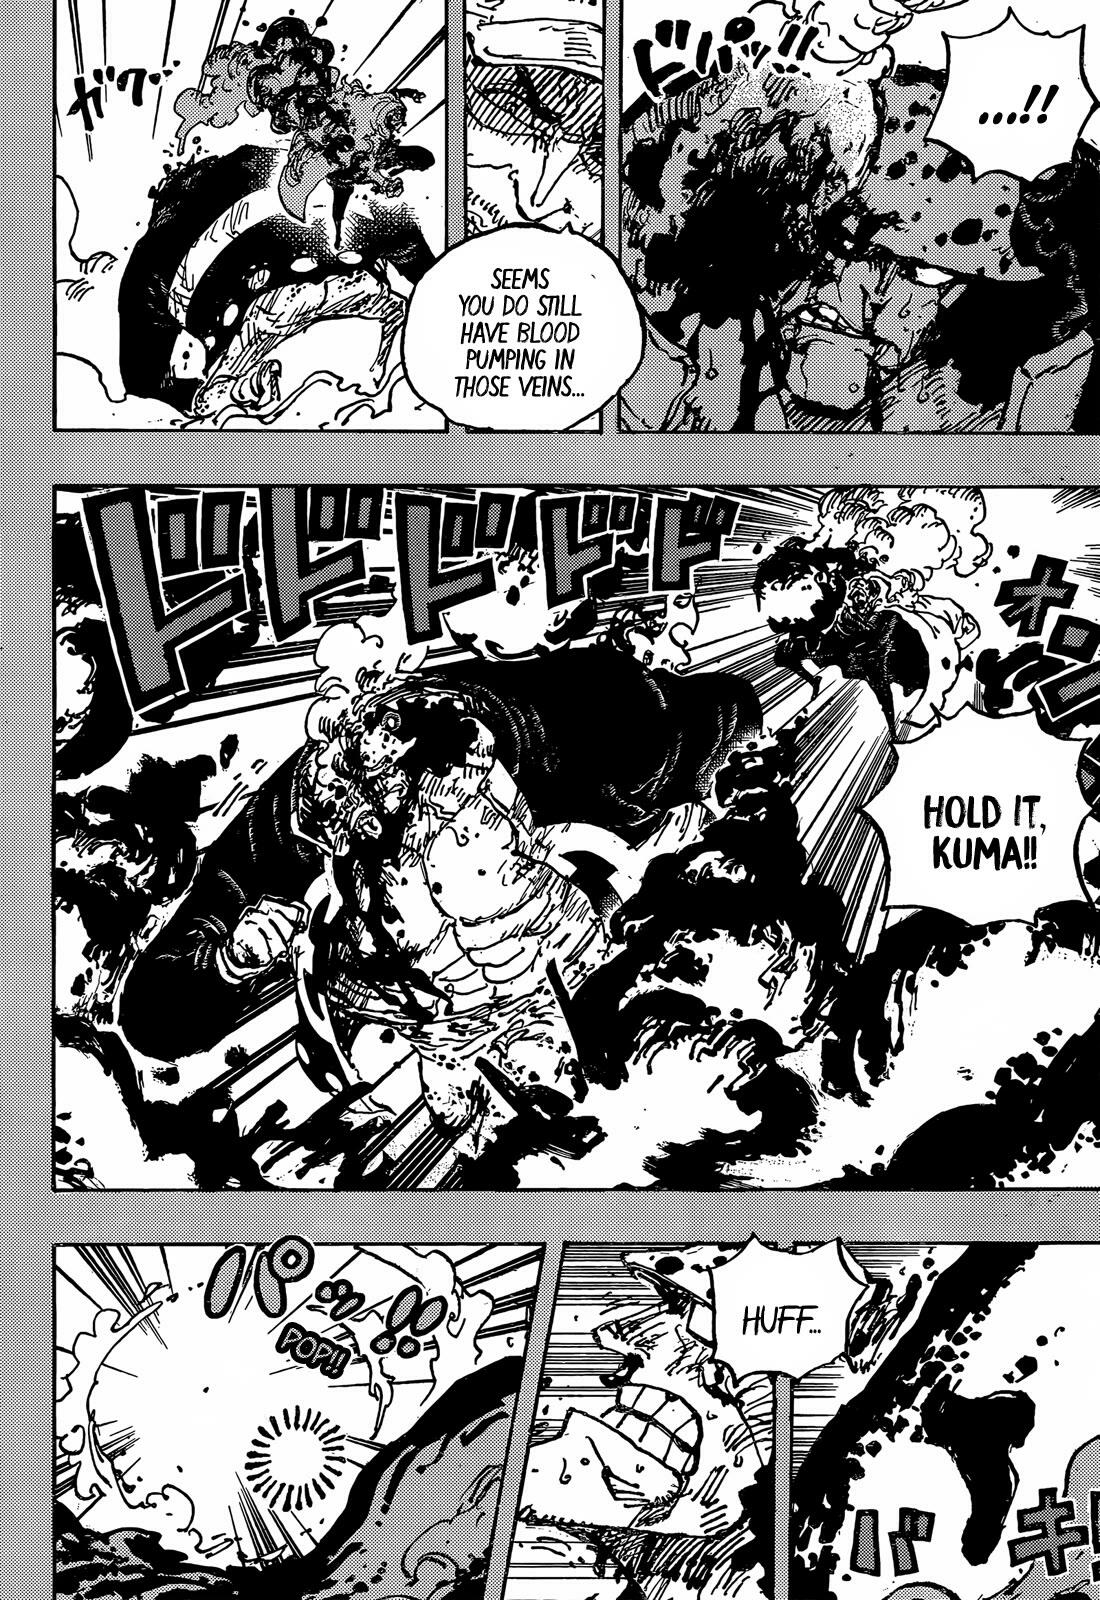 One Piece Ch 93: Luffy vs Arlong Part 2 Jay's Art - Illustrations ART street